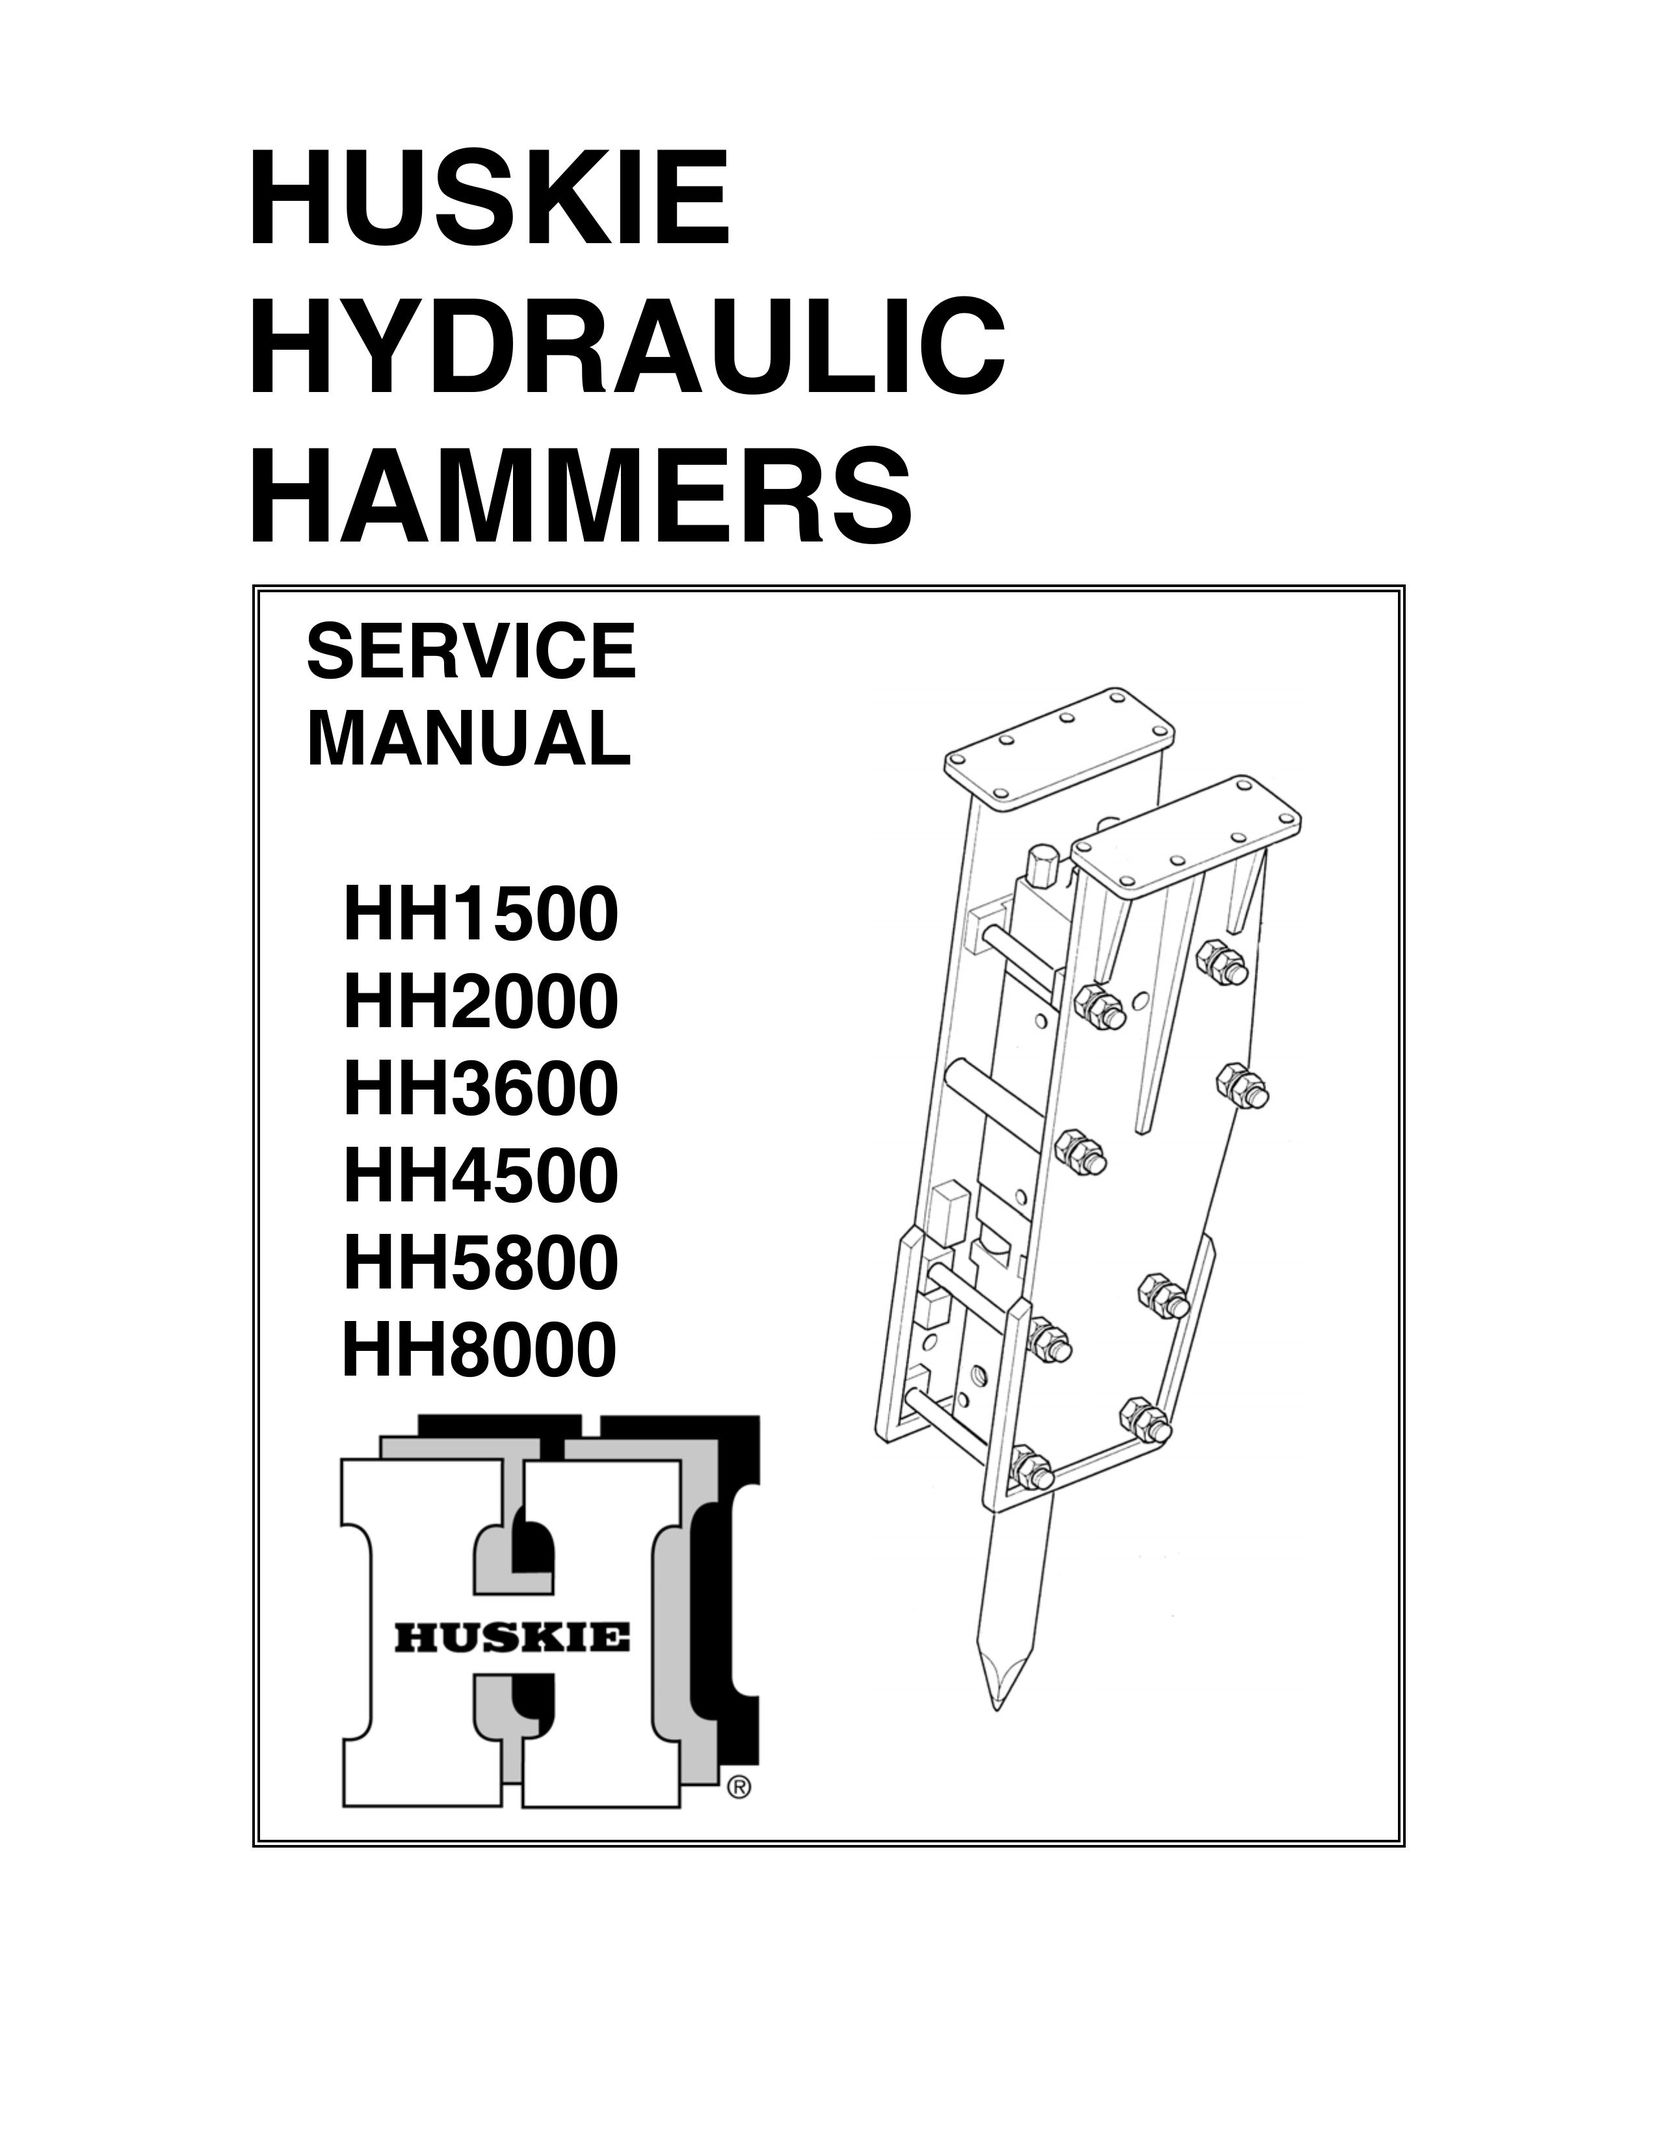 Huskee HH4500 Cordless Drill User Manual